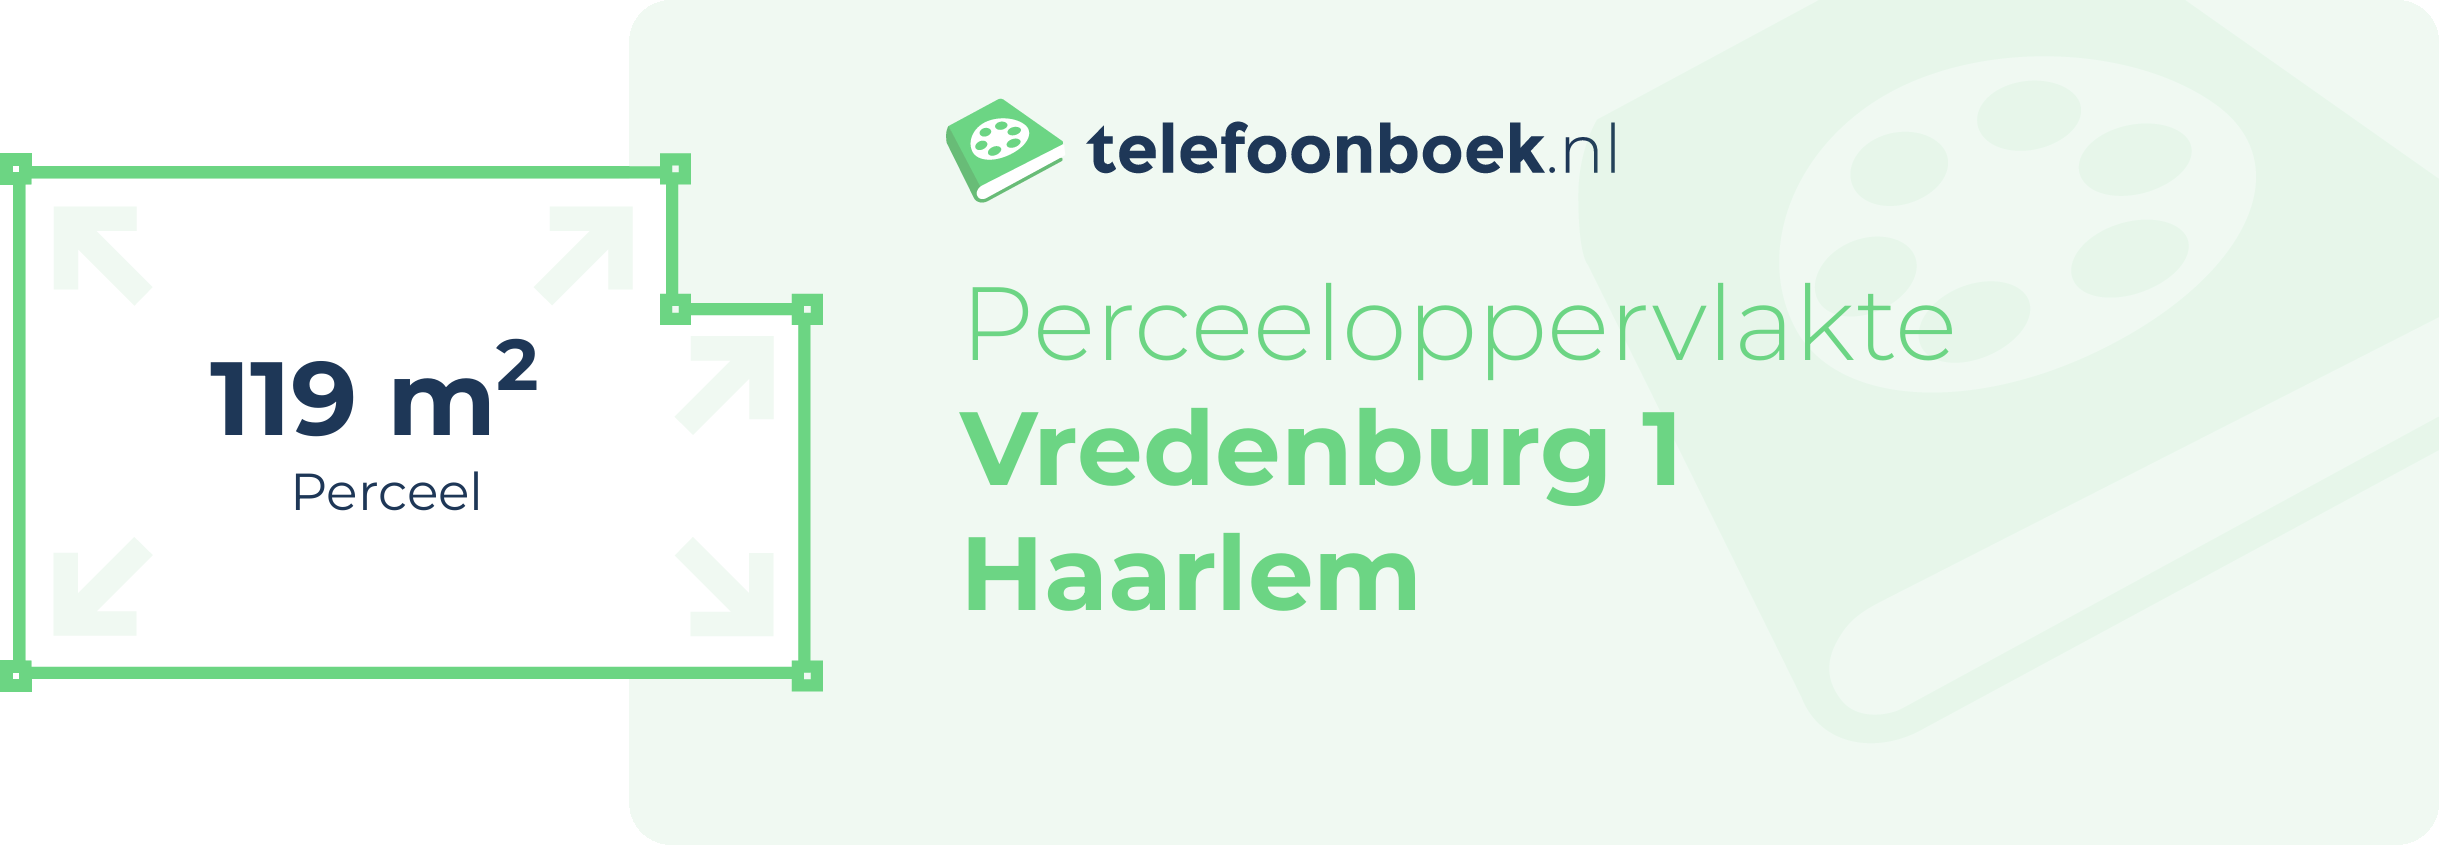 Perceeloppervlakte Vredenburg 1 Haarlem